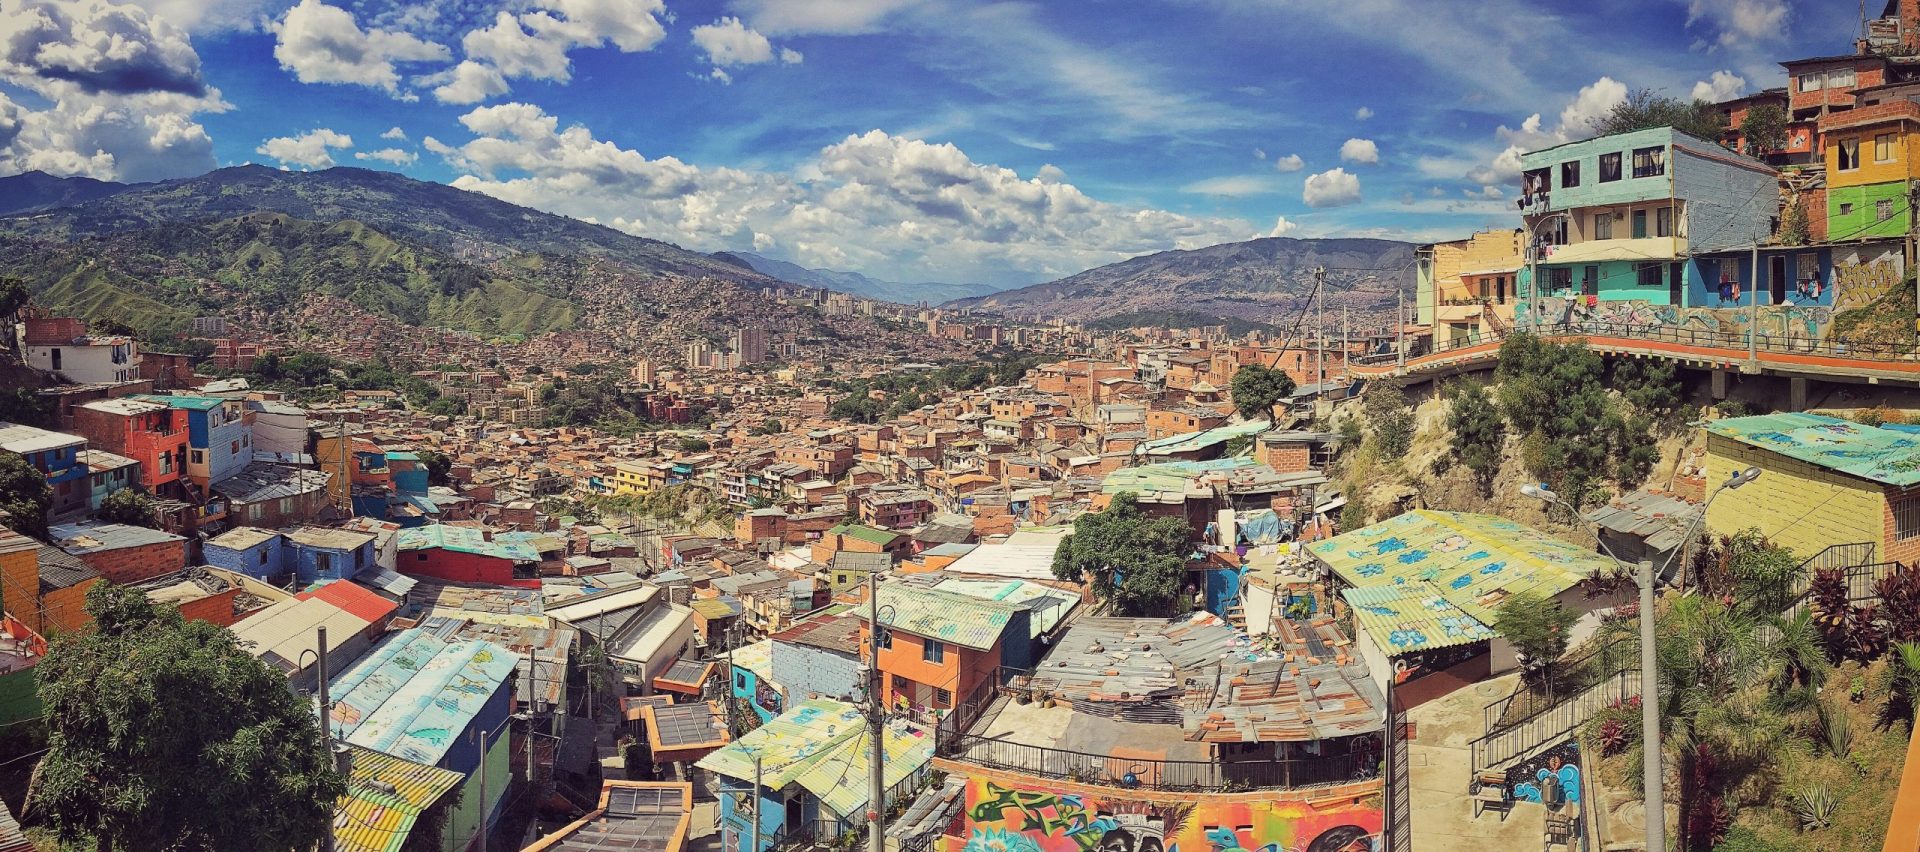 Turista britânico morto em miradouro na Colômbia